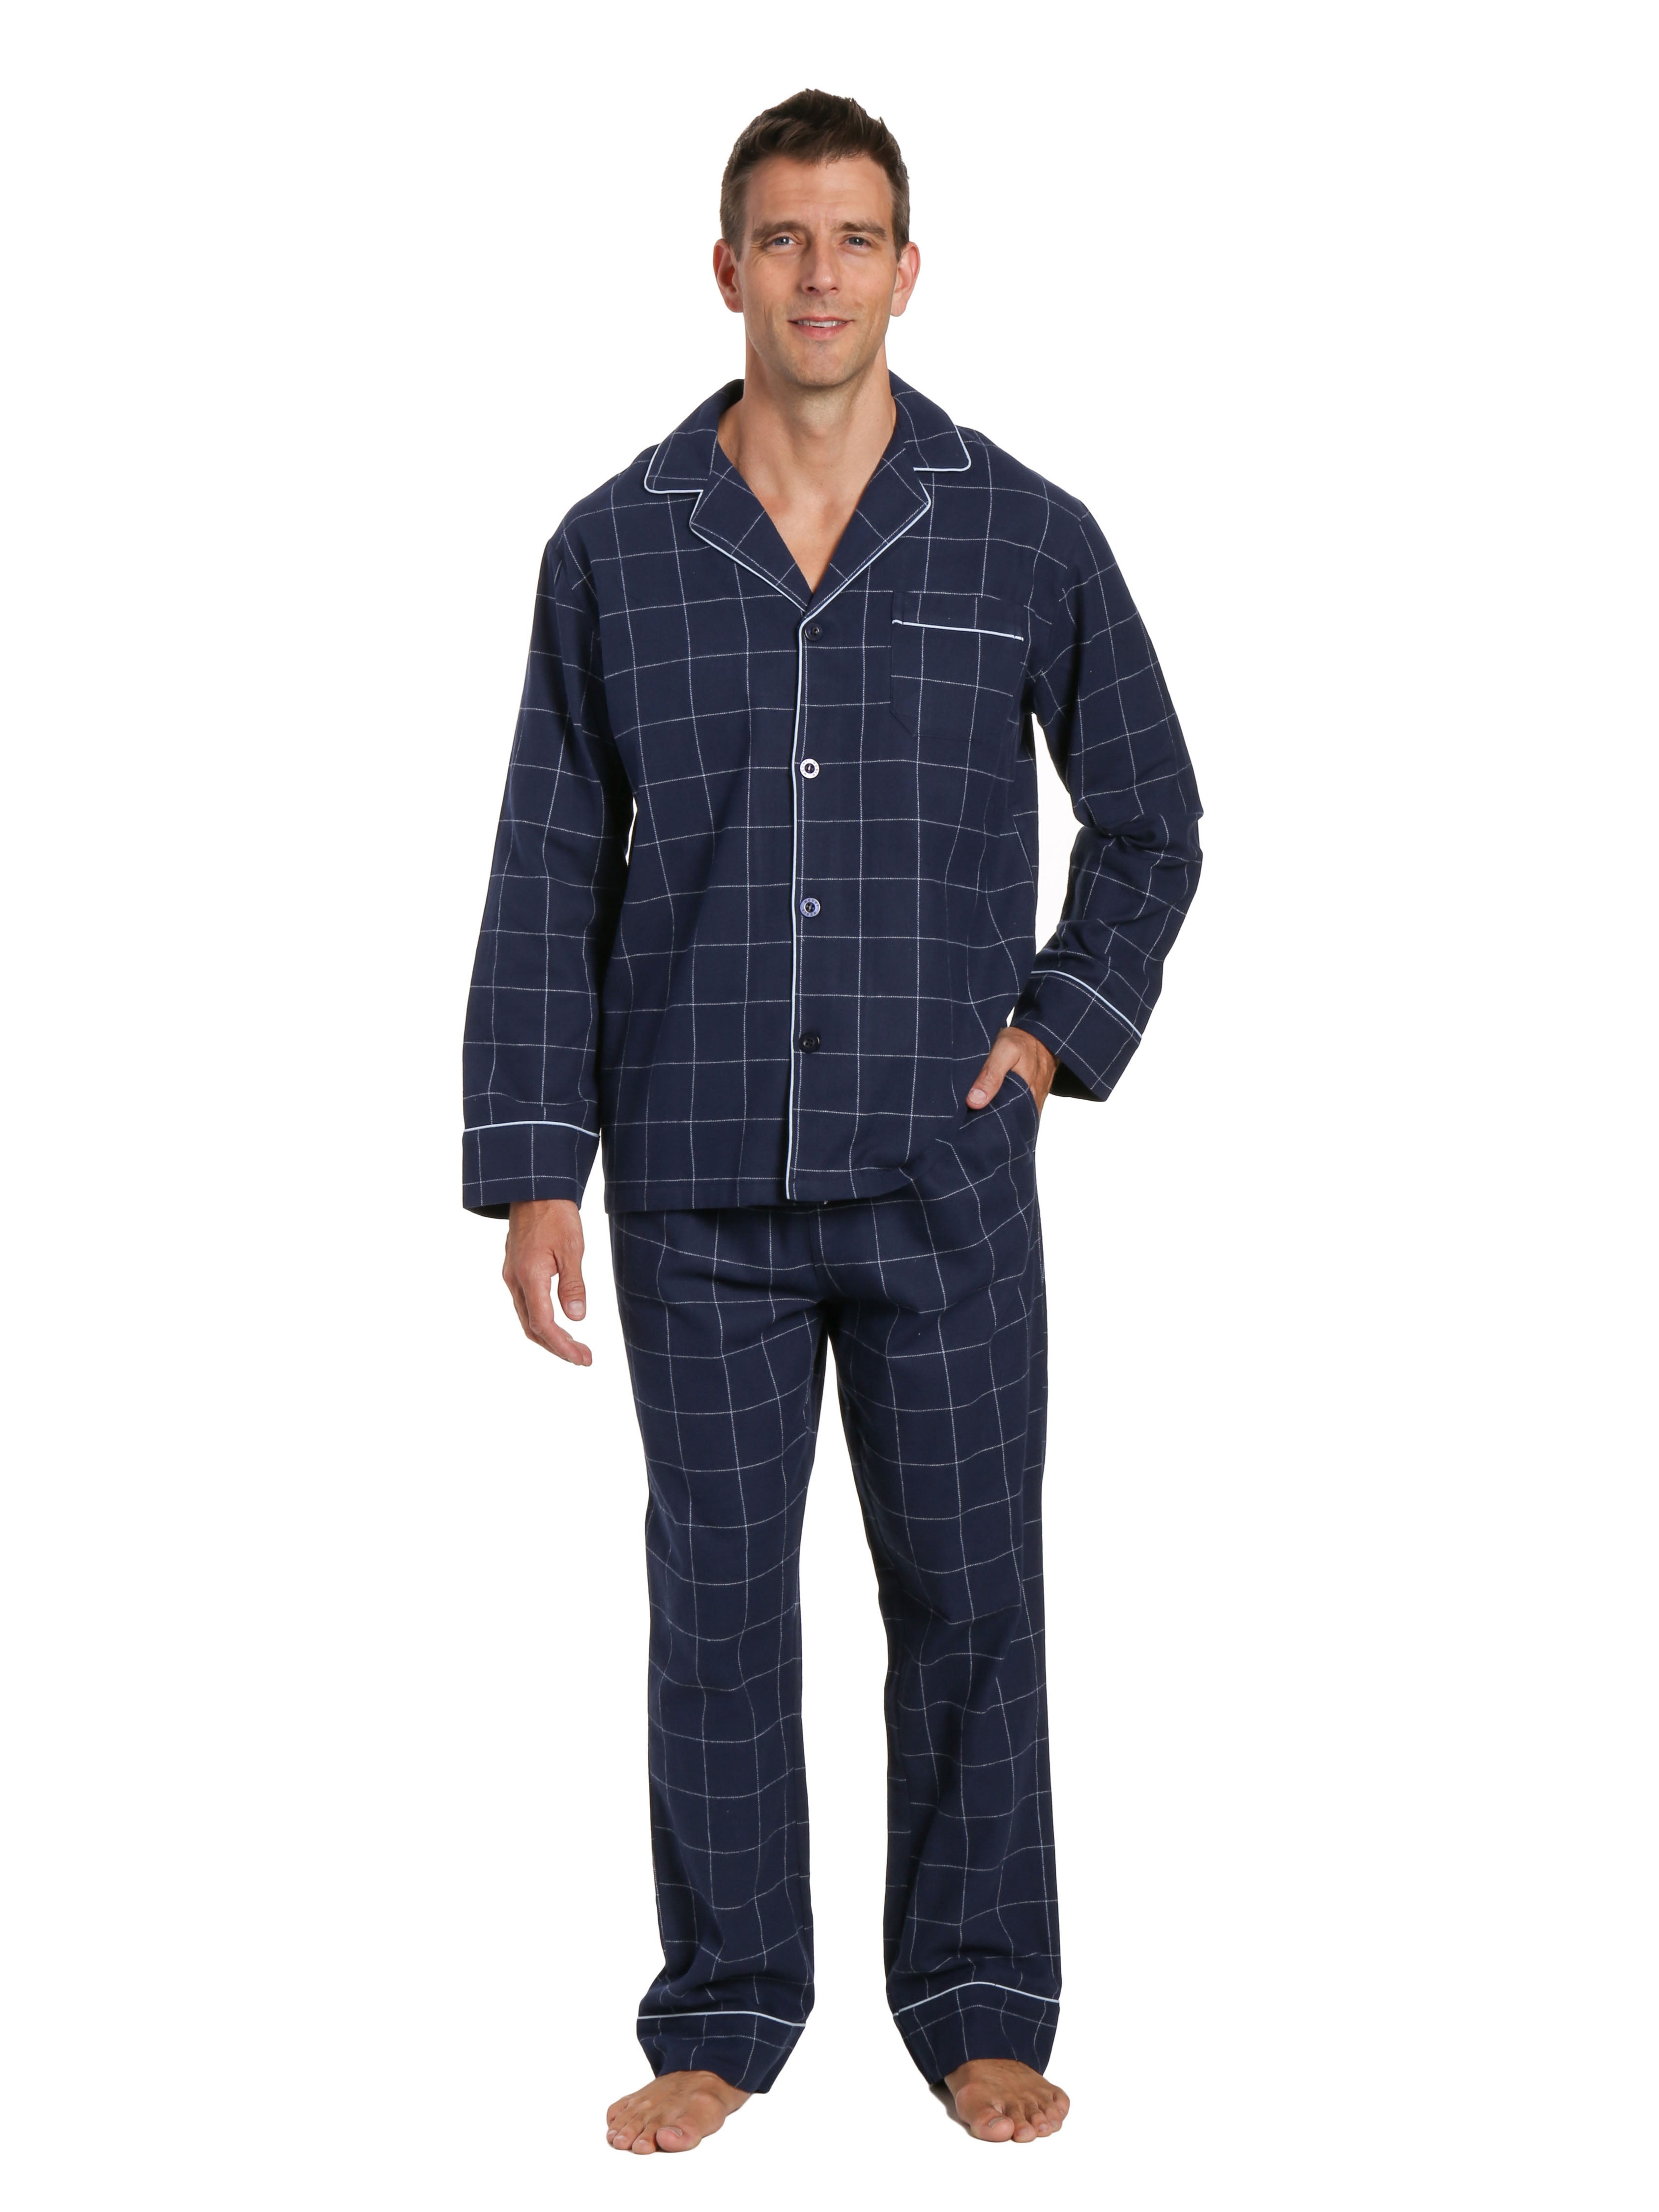 Mens 100% Cotton Flannel Pajama Set - Windowpane Checks - Navy